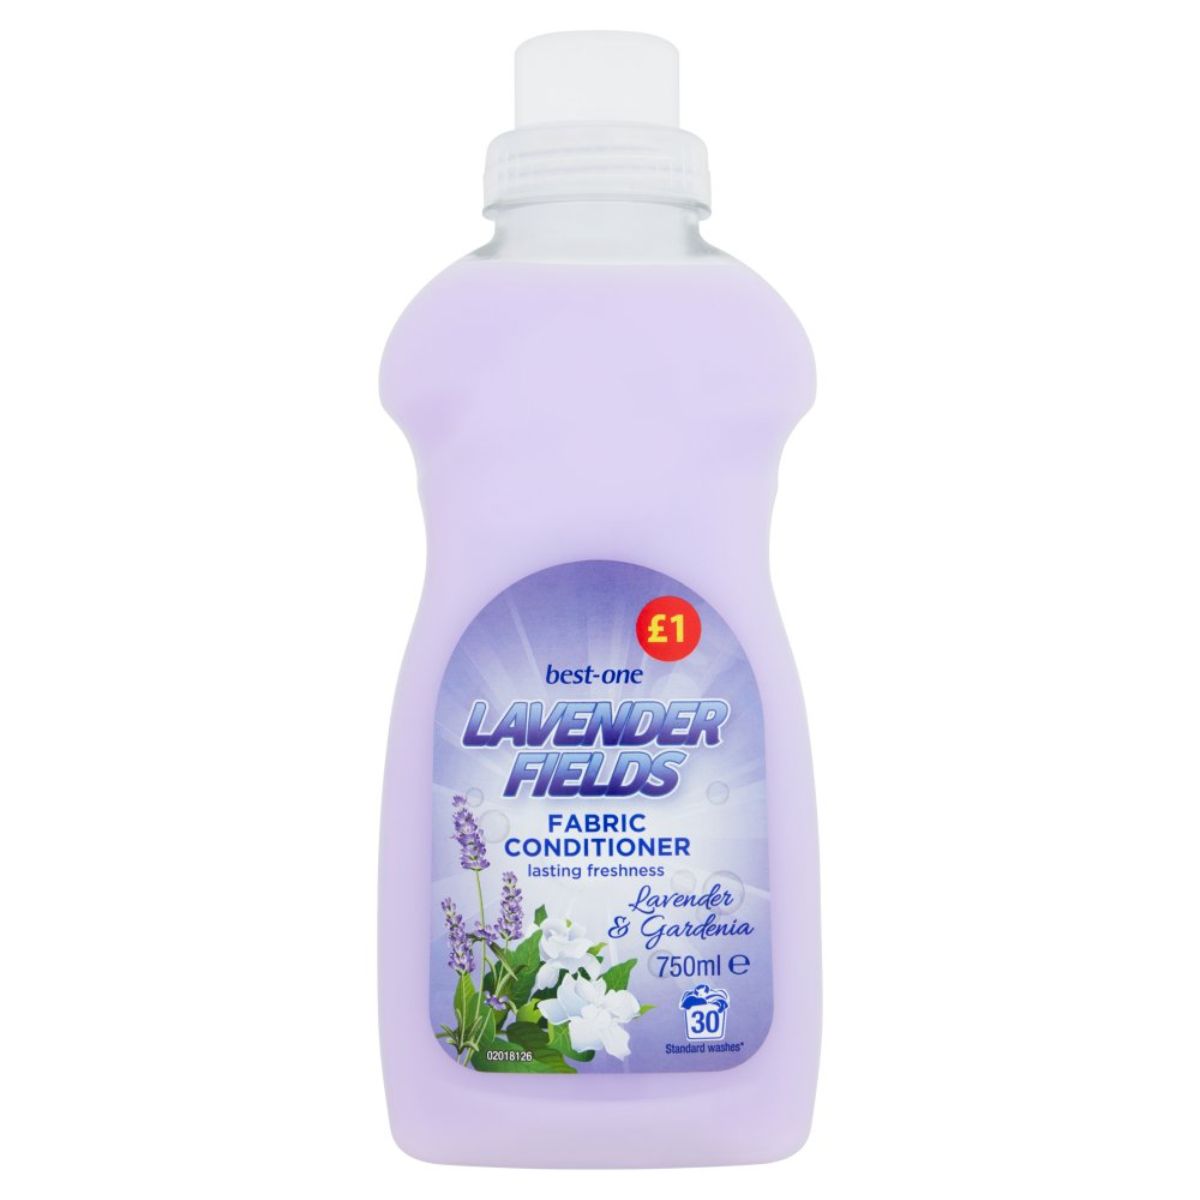 A bottle of Best One - Lavender Fields Lavender & Gardenia Fabric Conditioner - 750ml laundry detergent.